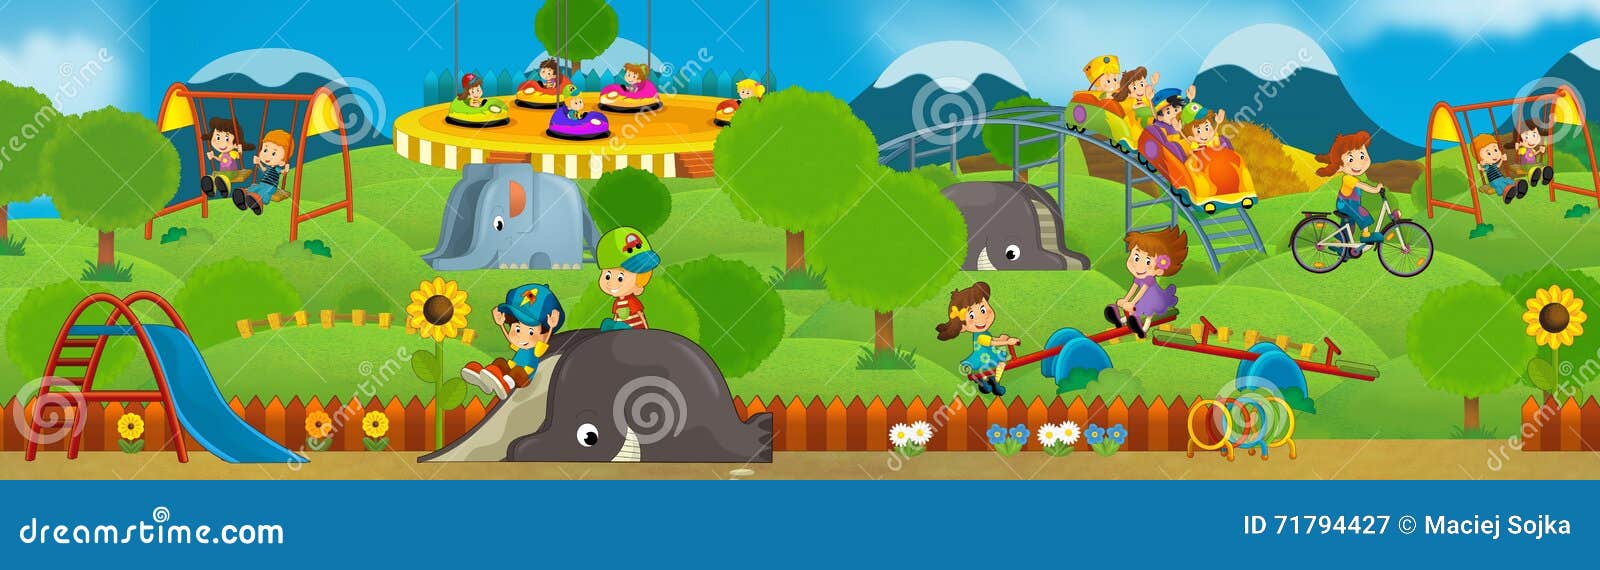 Cartoon Happy and Funny Traditional Scene with Amusement Park Stock  Illustration - Illustration of joyful, background: 71794427